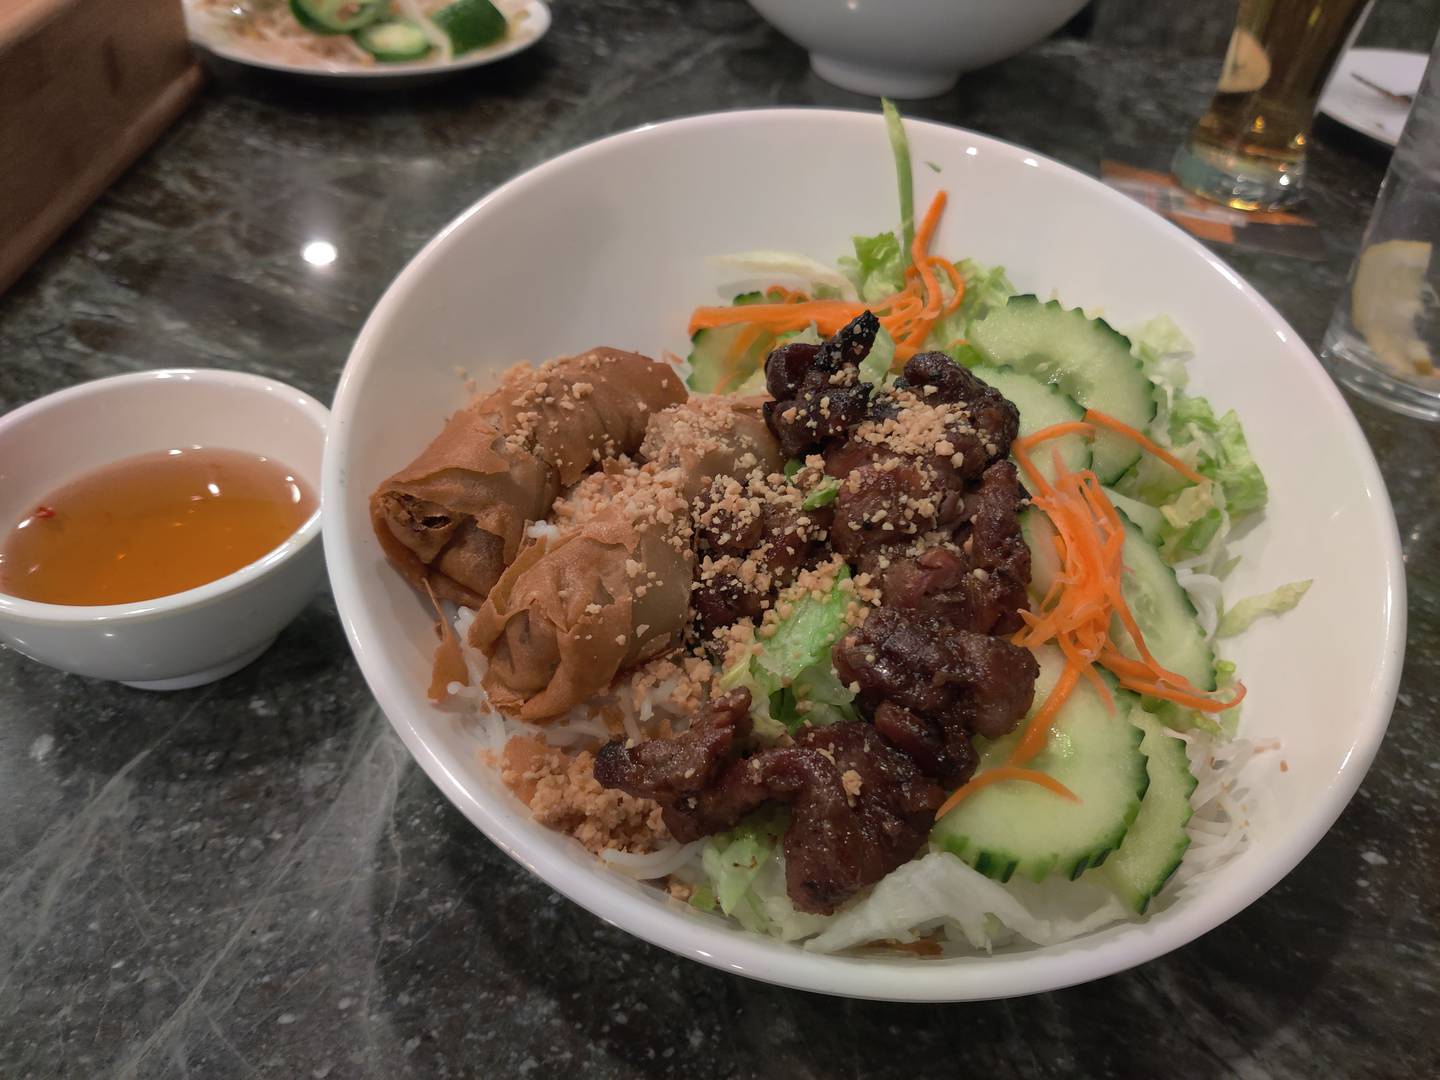 The Vietnamese restaurant Pho Xich Lo in Geneva serves grilled pork – bun.